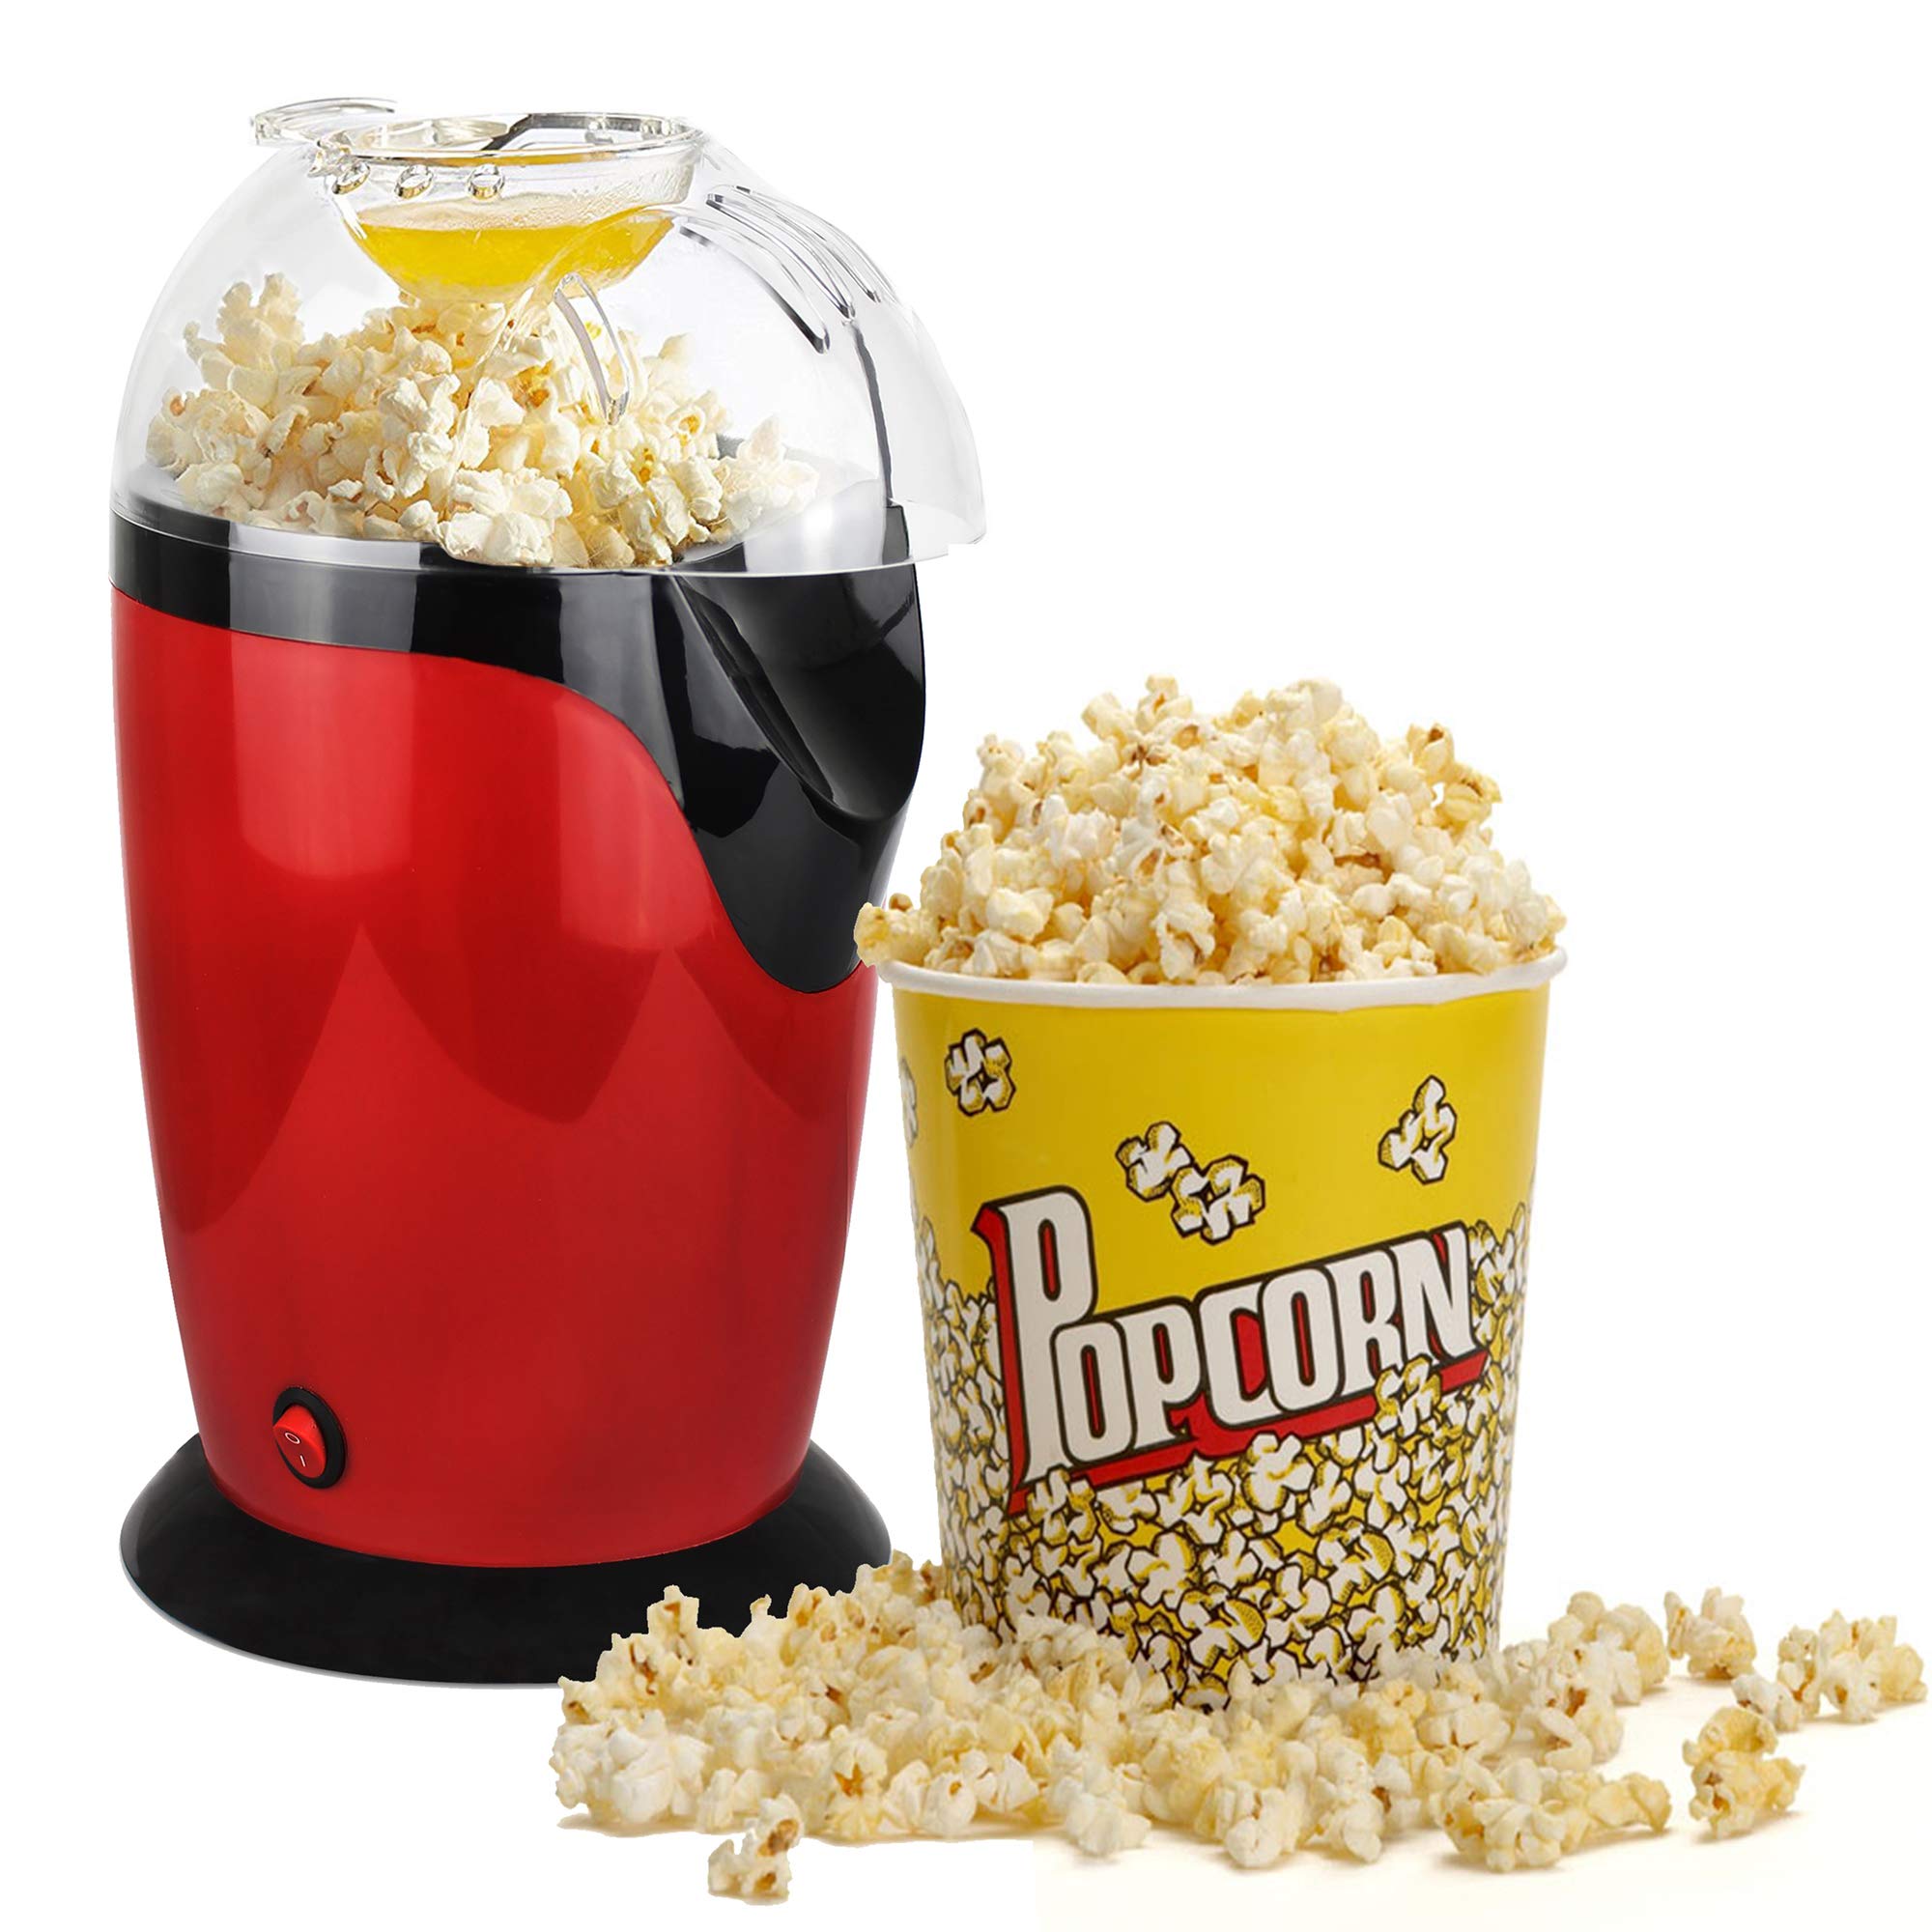 Home-Popcorn-Machine-Electric-Popcorn-Maker-Red-Dimensions-30-5-x-17-x-16-3-cm